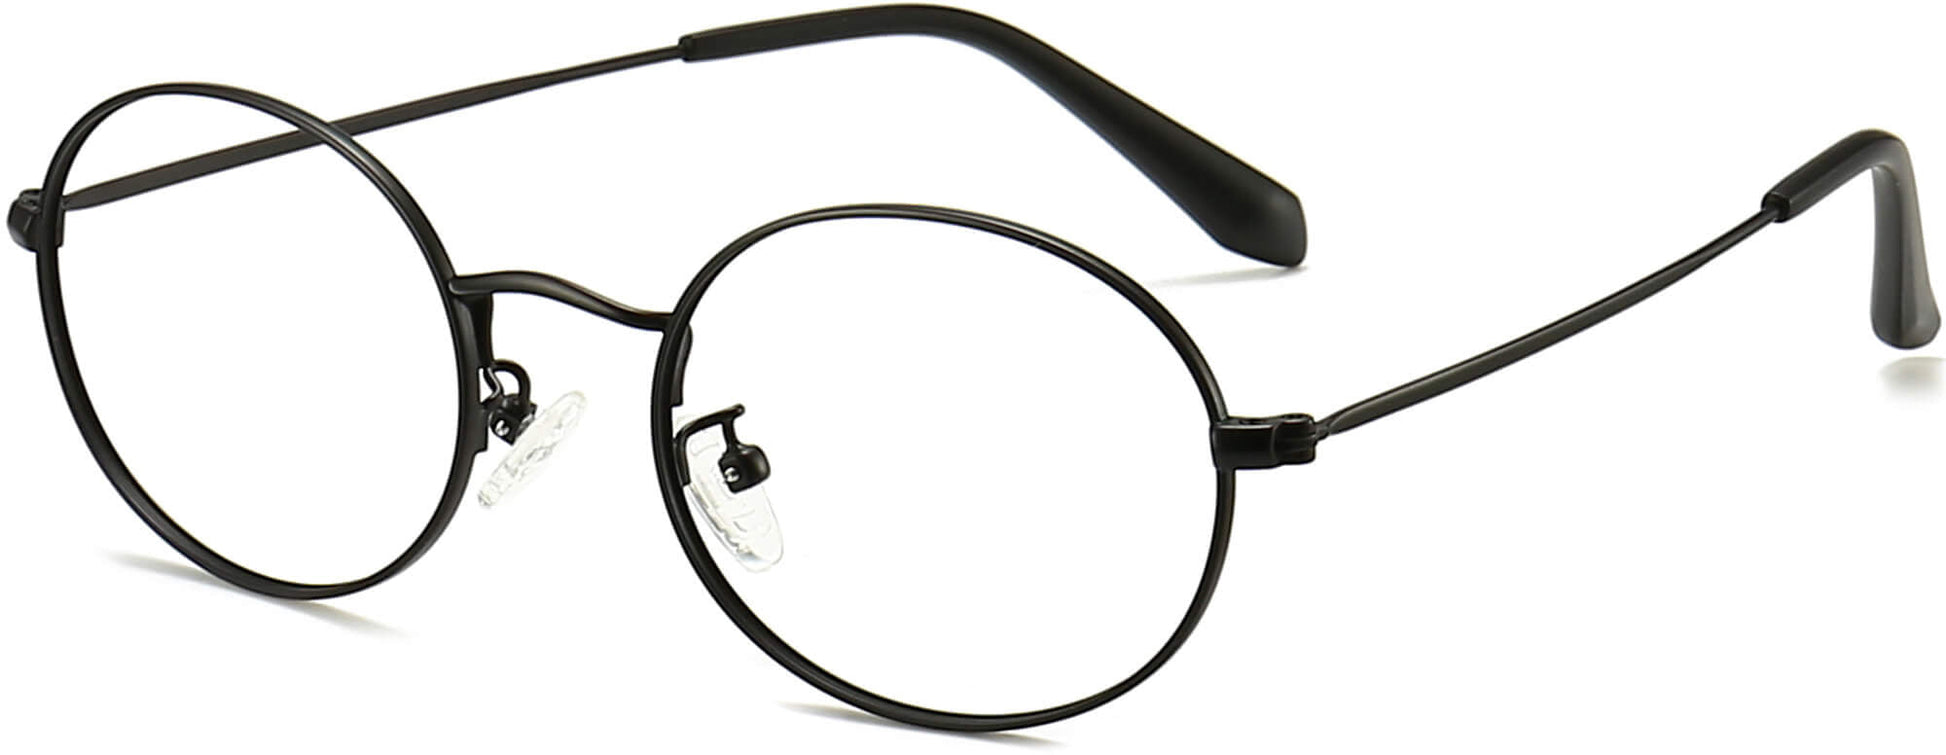 Dariel Round Black Eyeglasses from ANRRI, angle view